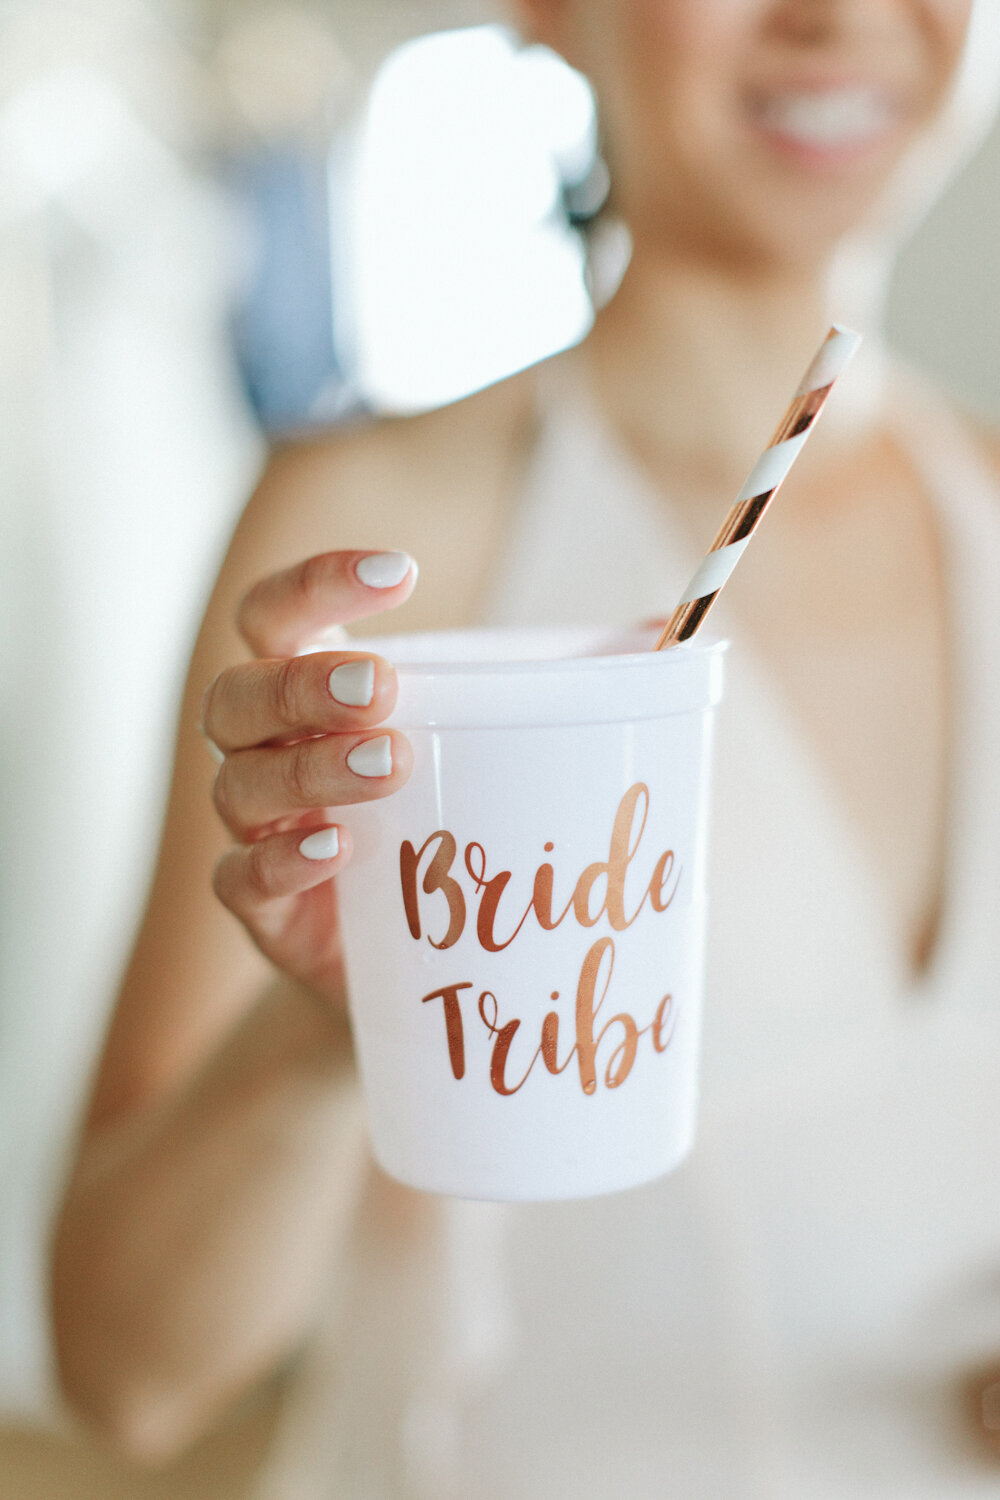 bride tribe cup.jpg